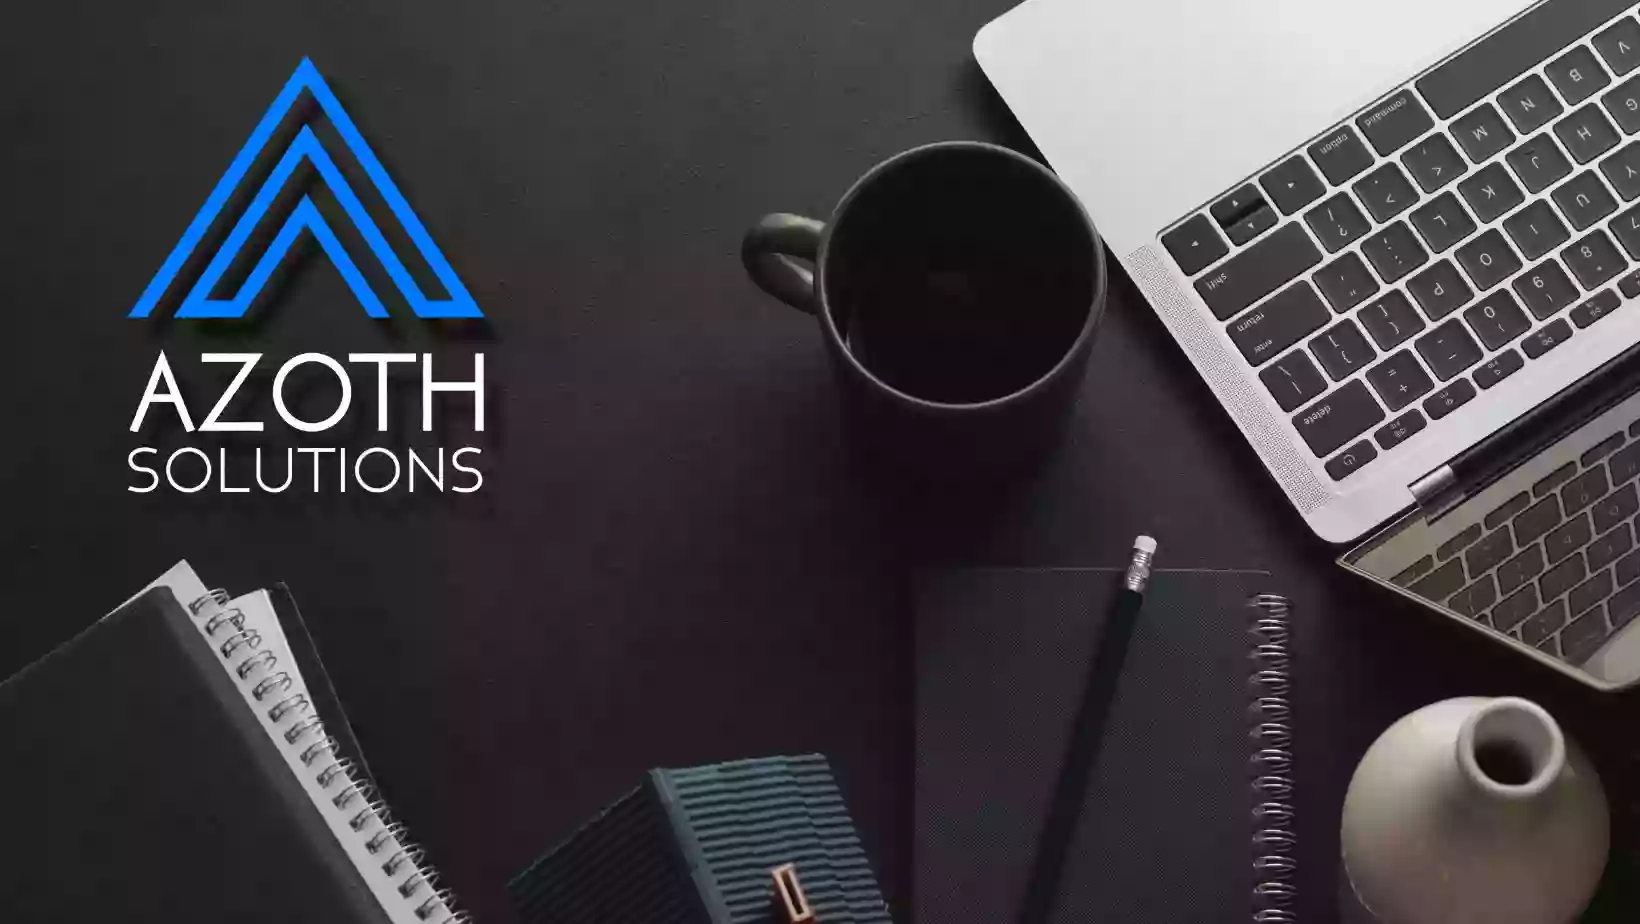 Azoth Solutions Ltd